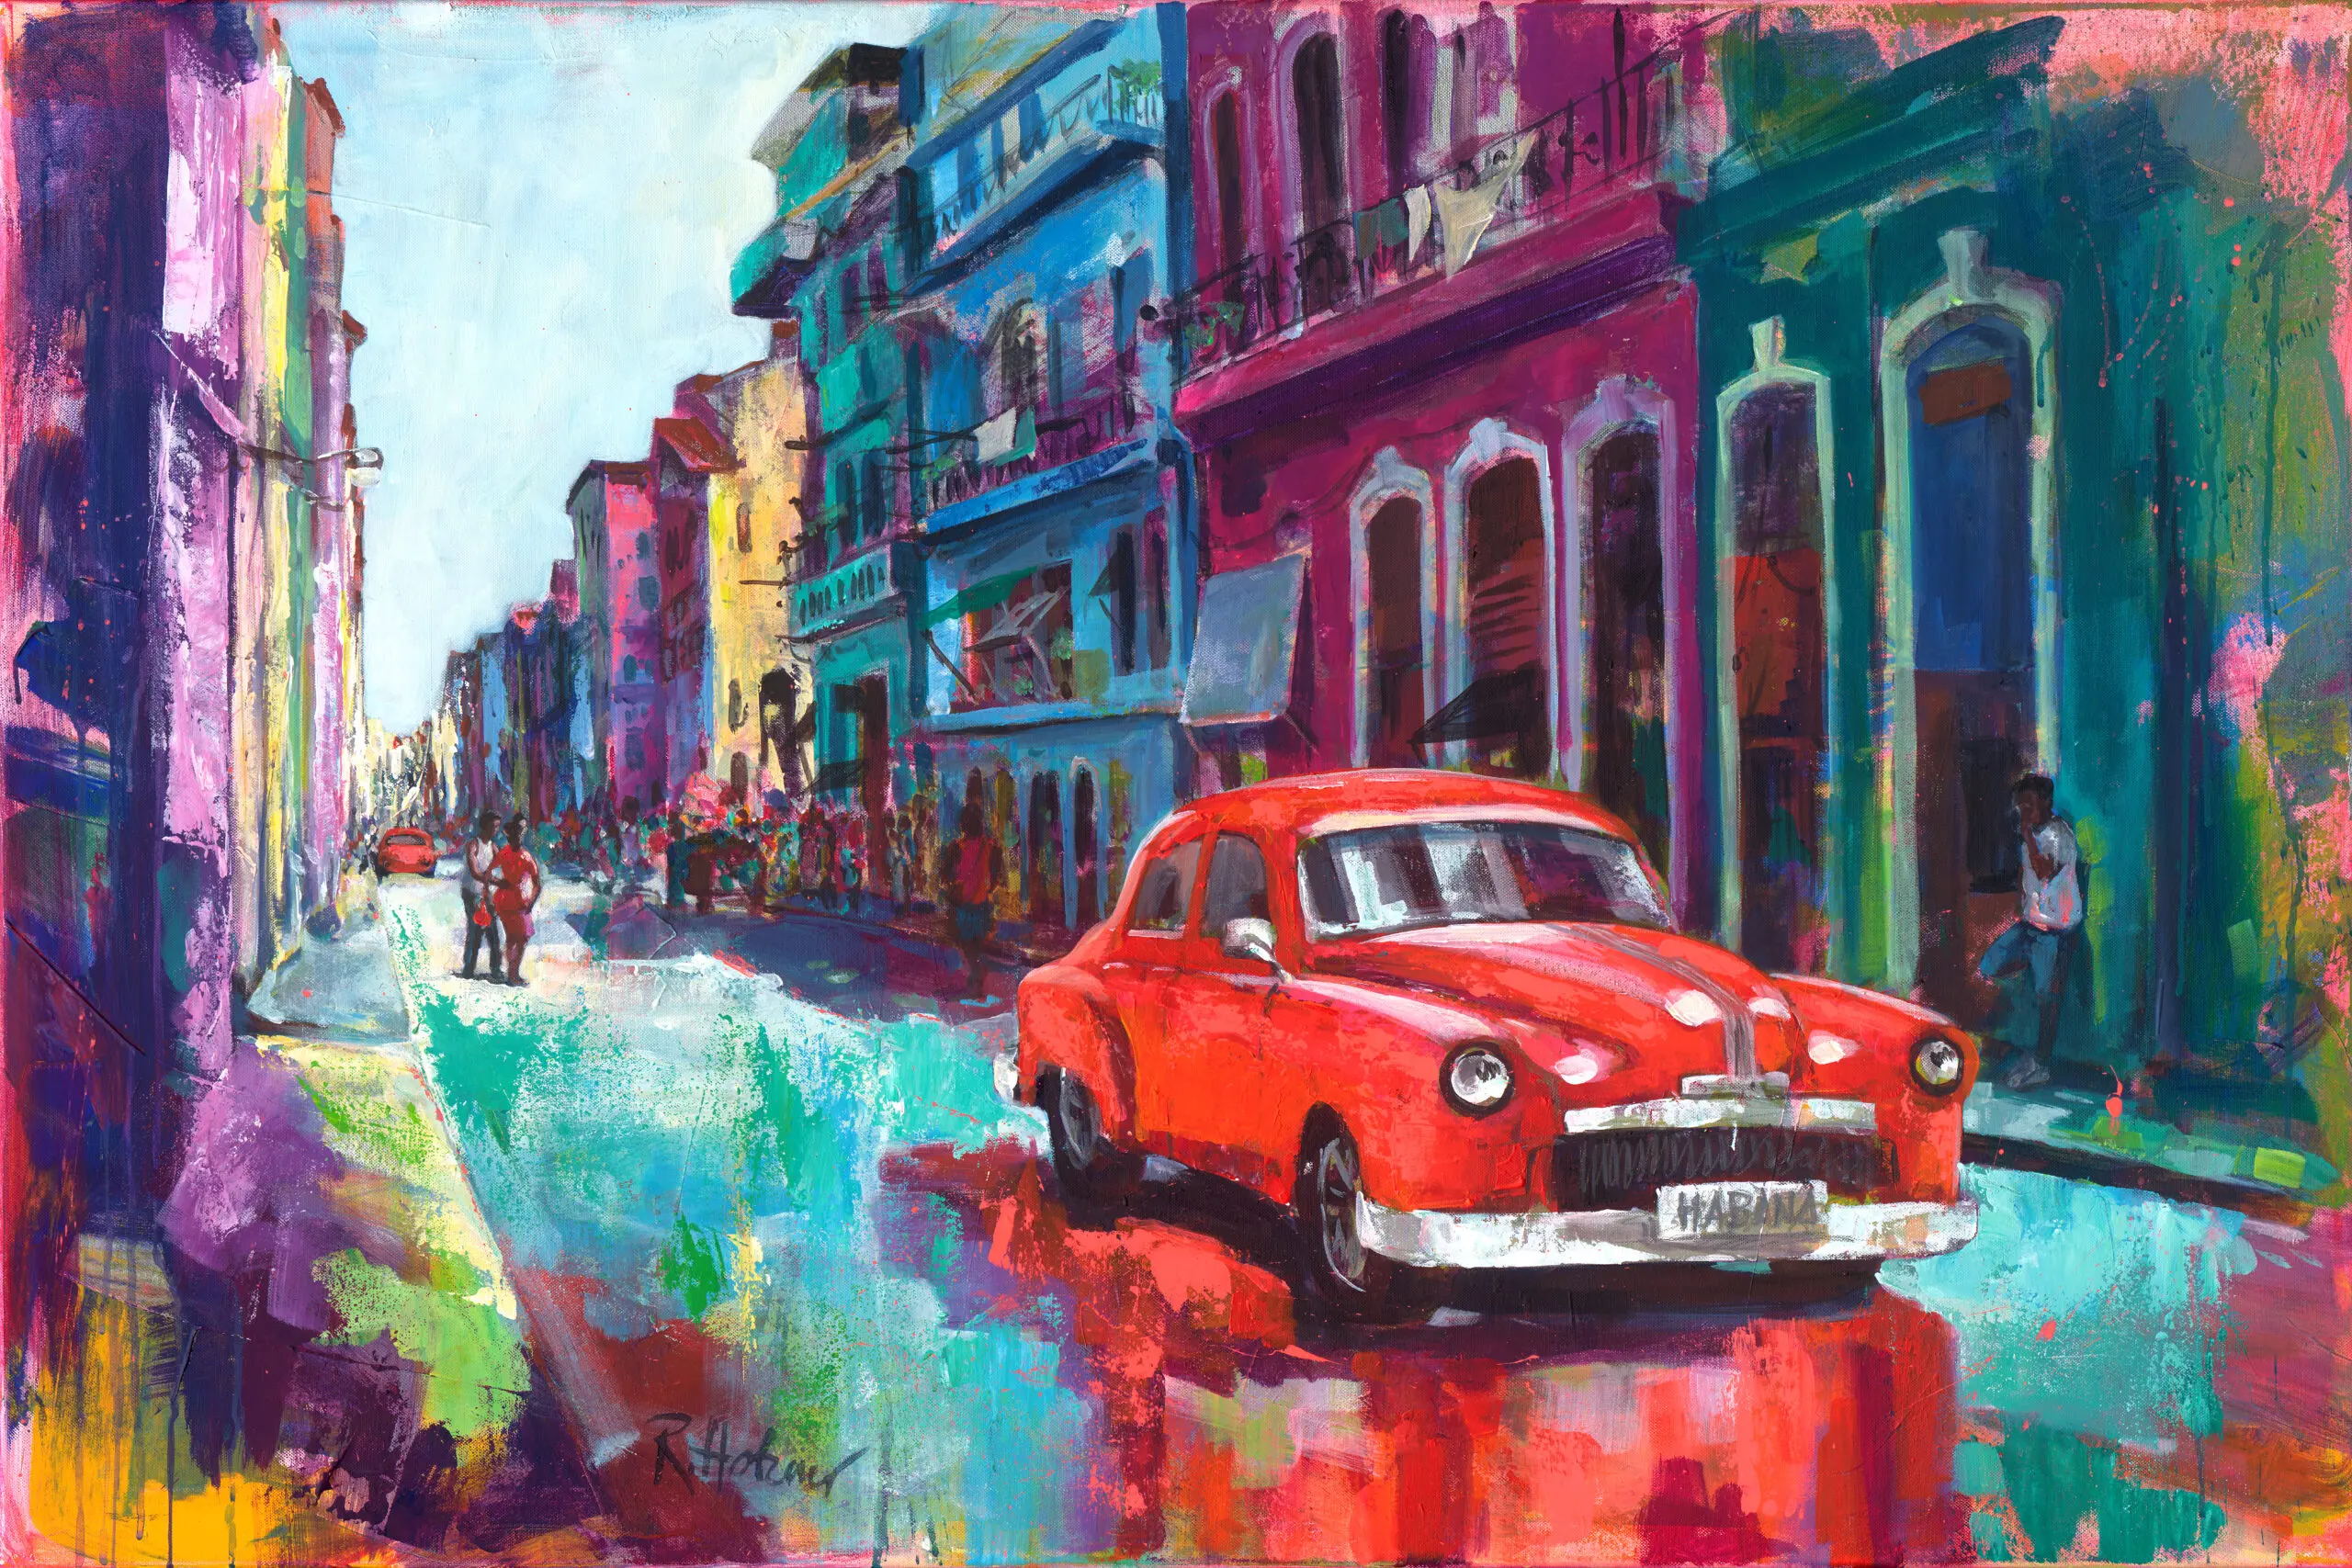 Wandbild (5039) RH_069_Dancing in the streets of Habana präsentiert: Menschen,Technik,Kreatives,Architektur,Abstrakt,Landschaften,Amerika,Menschengruppen,Auto,Sonstiges Kreatives